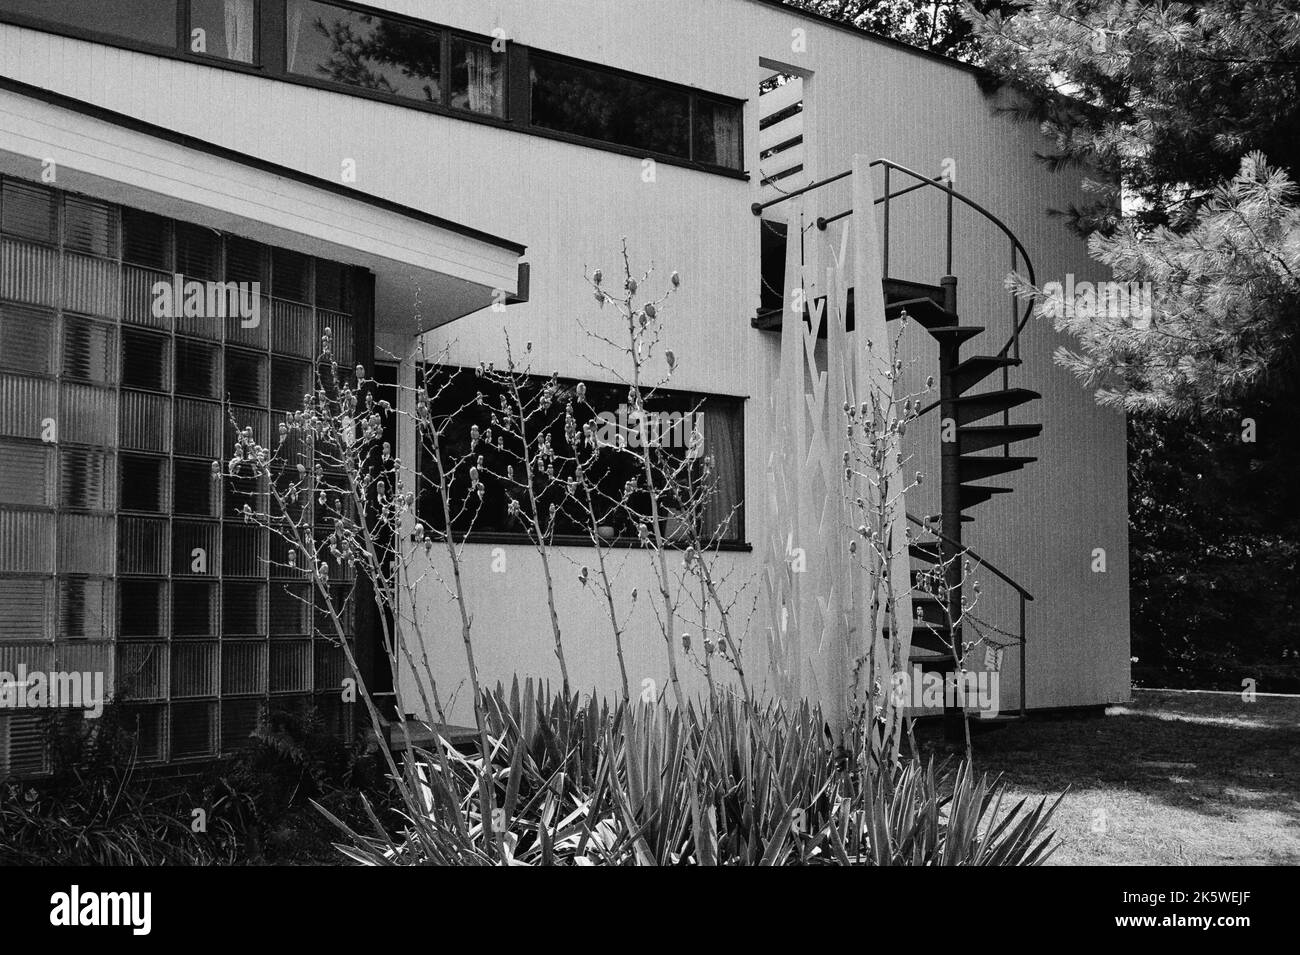 La Histórica Gropius House De Lincoln Massachusetts Con Influencias Bauhaus Y Un Hermoso 0334